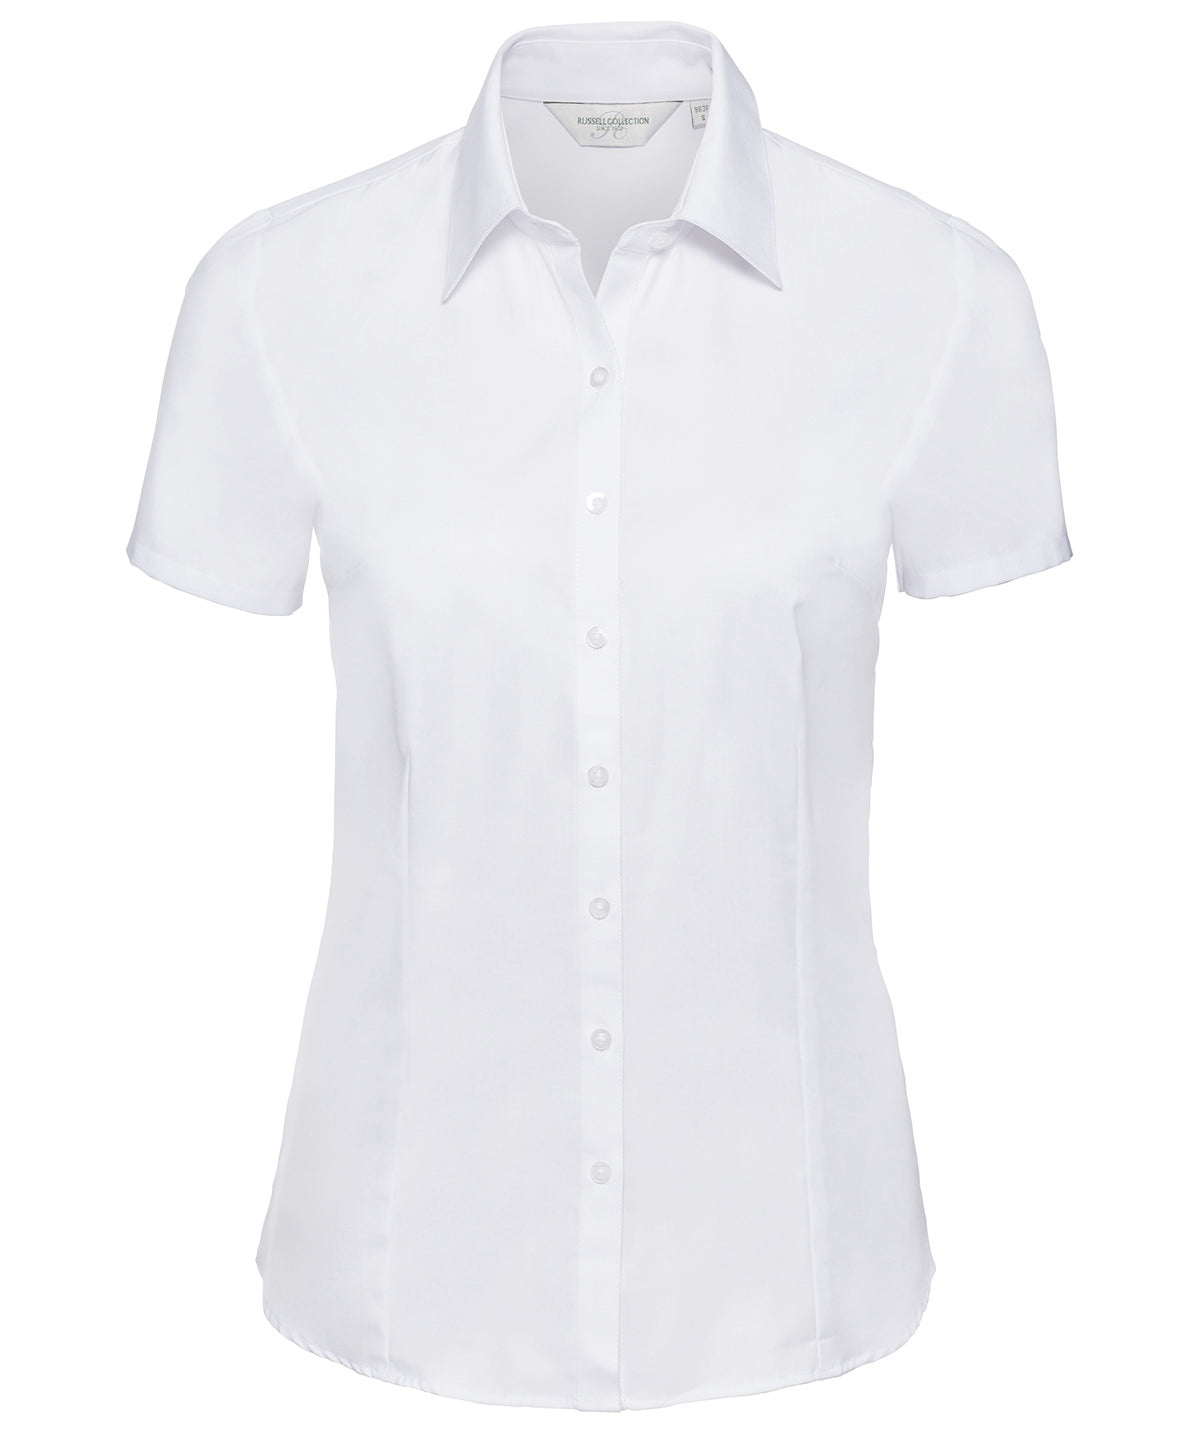 Bolir - Women's Short Sleeve Herringbone Shirt